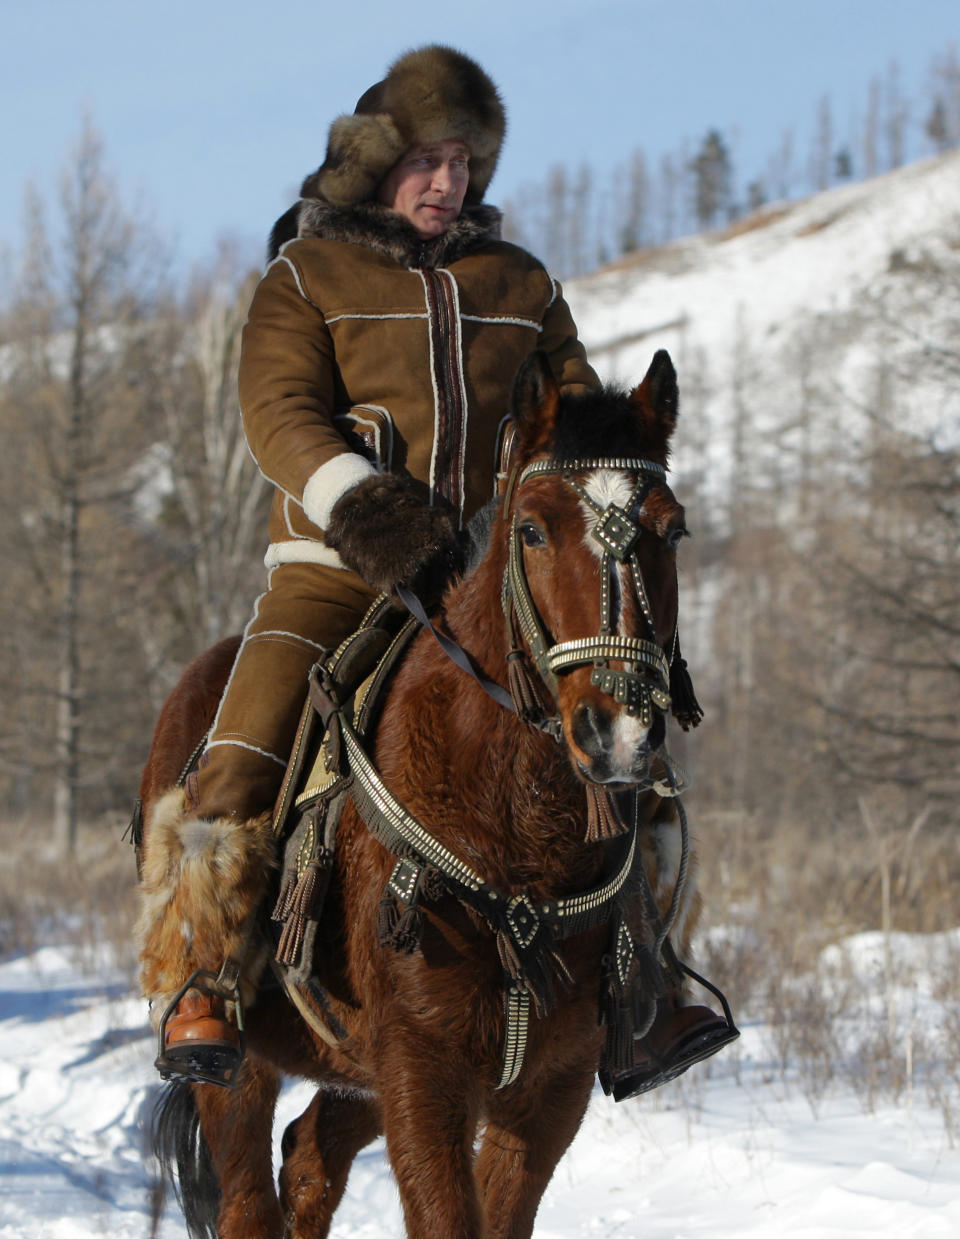 Putin rides a horse in the Karatash foothills in Siberia on Feb. 25, 2010.